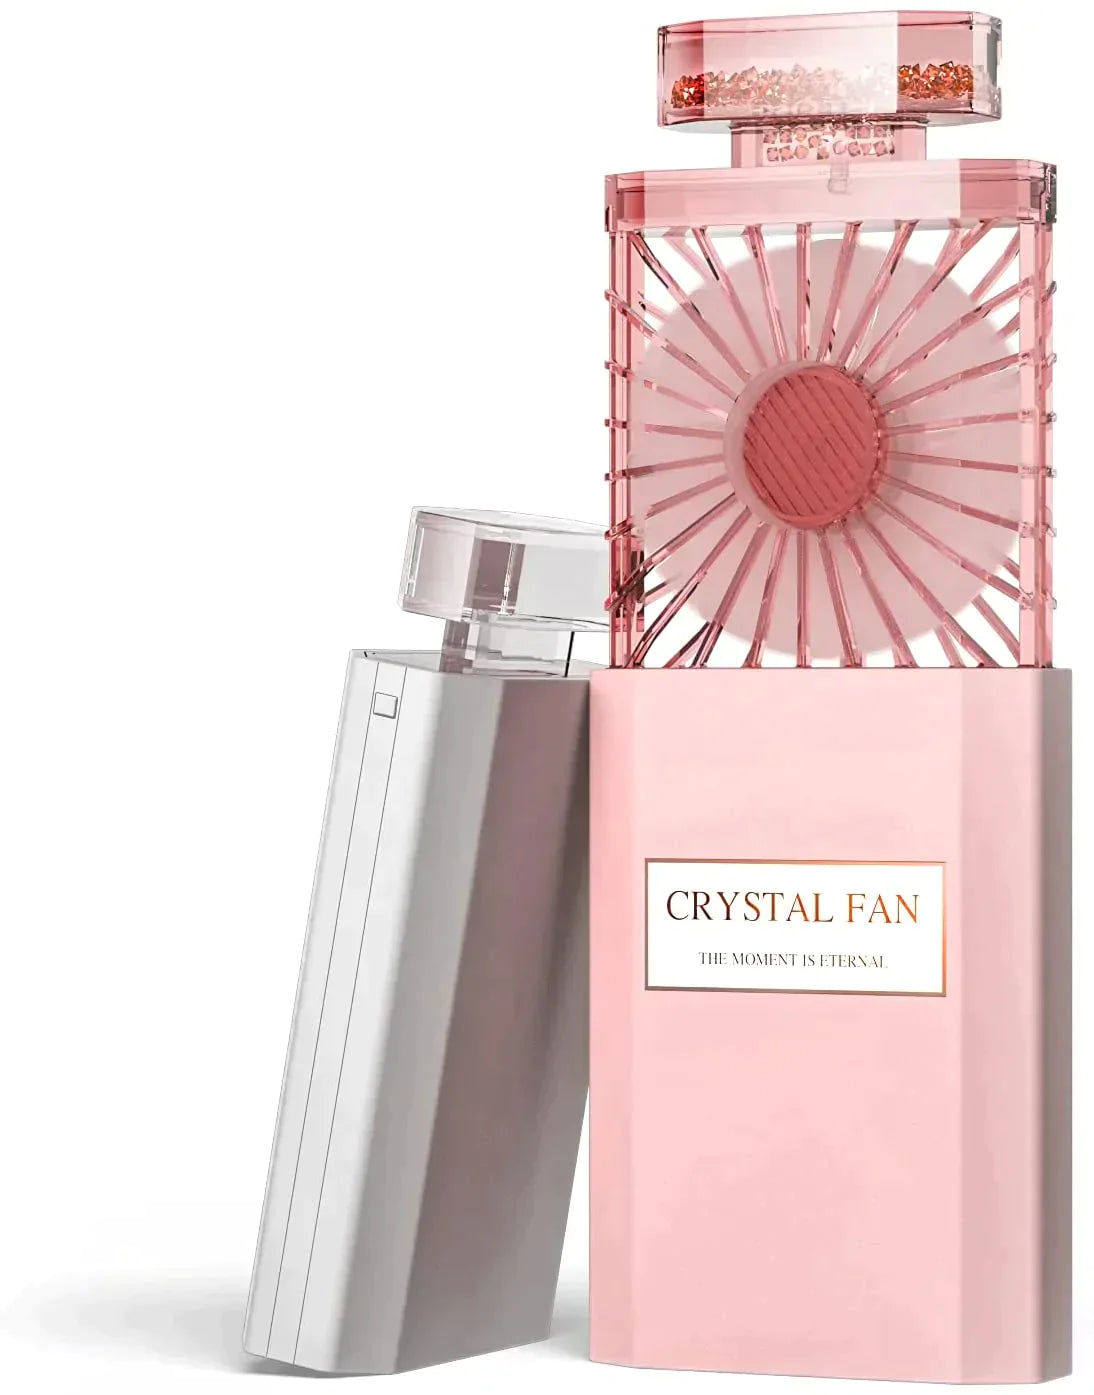 Perfume Bottle Design Mini Fan OwnWholesale